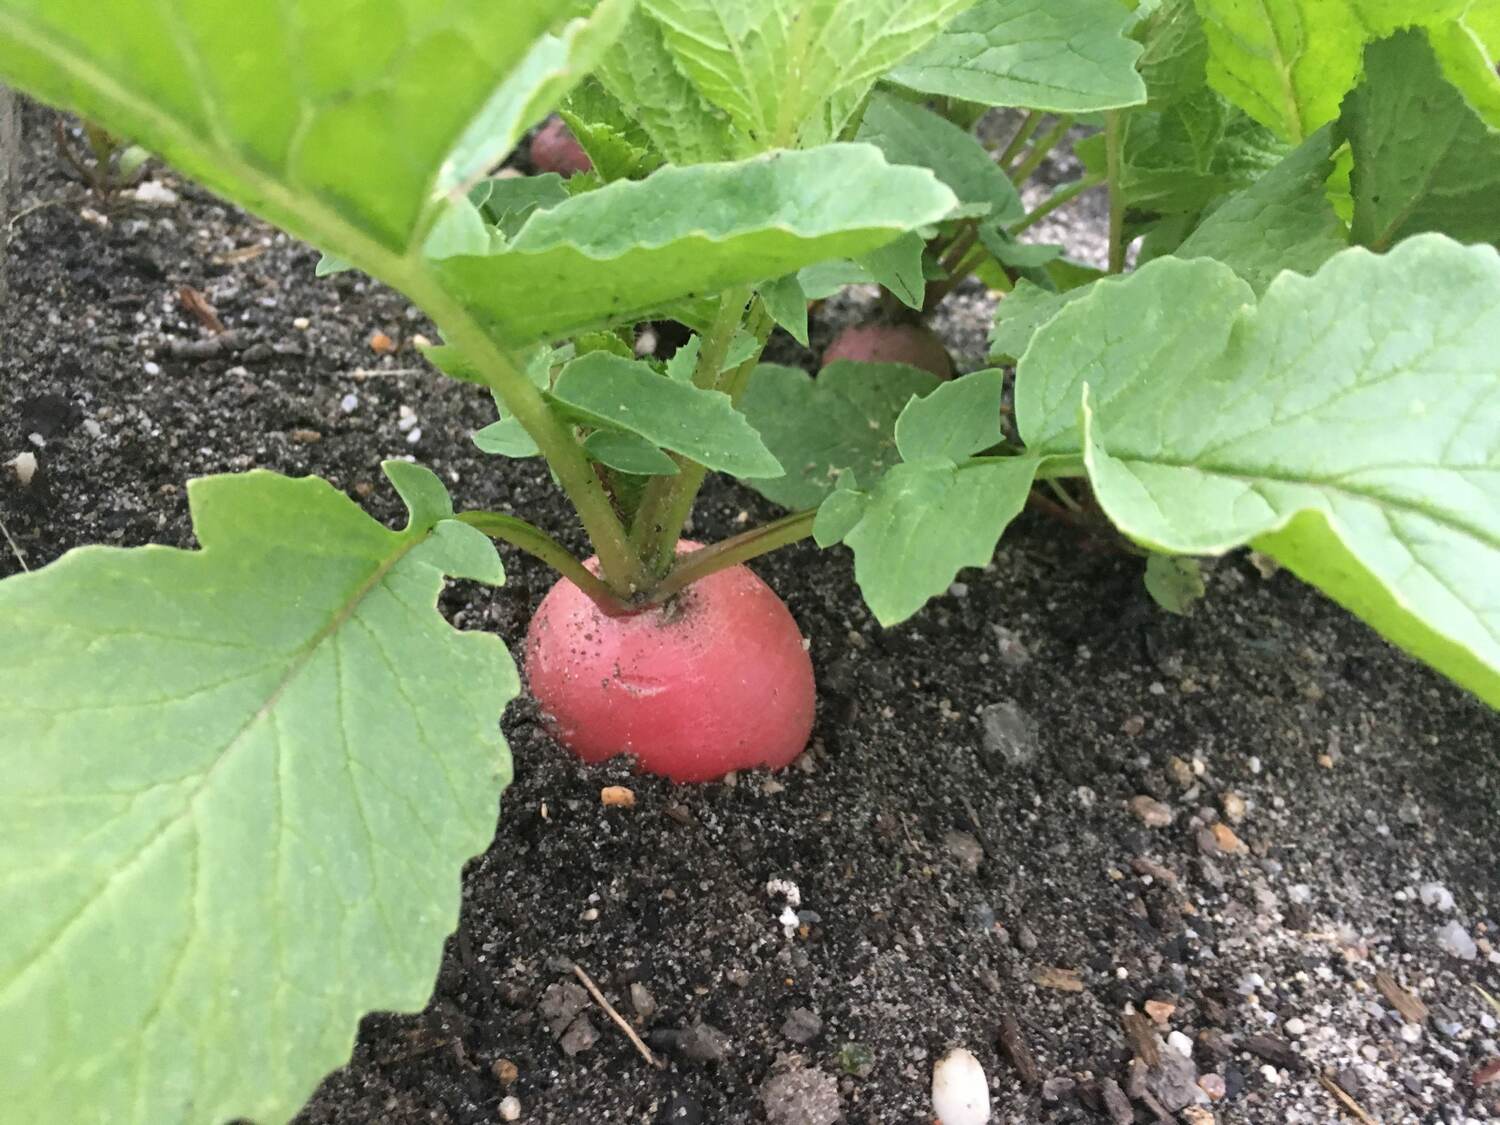 A radish ready to be harvested. BRENDAN J. O'REILLY